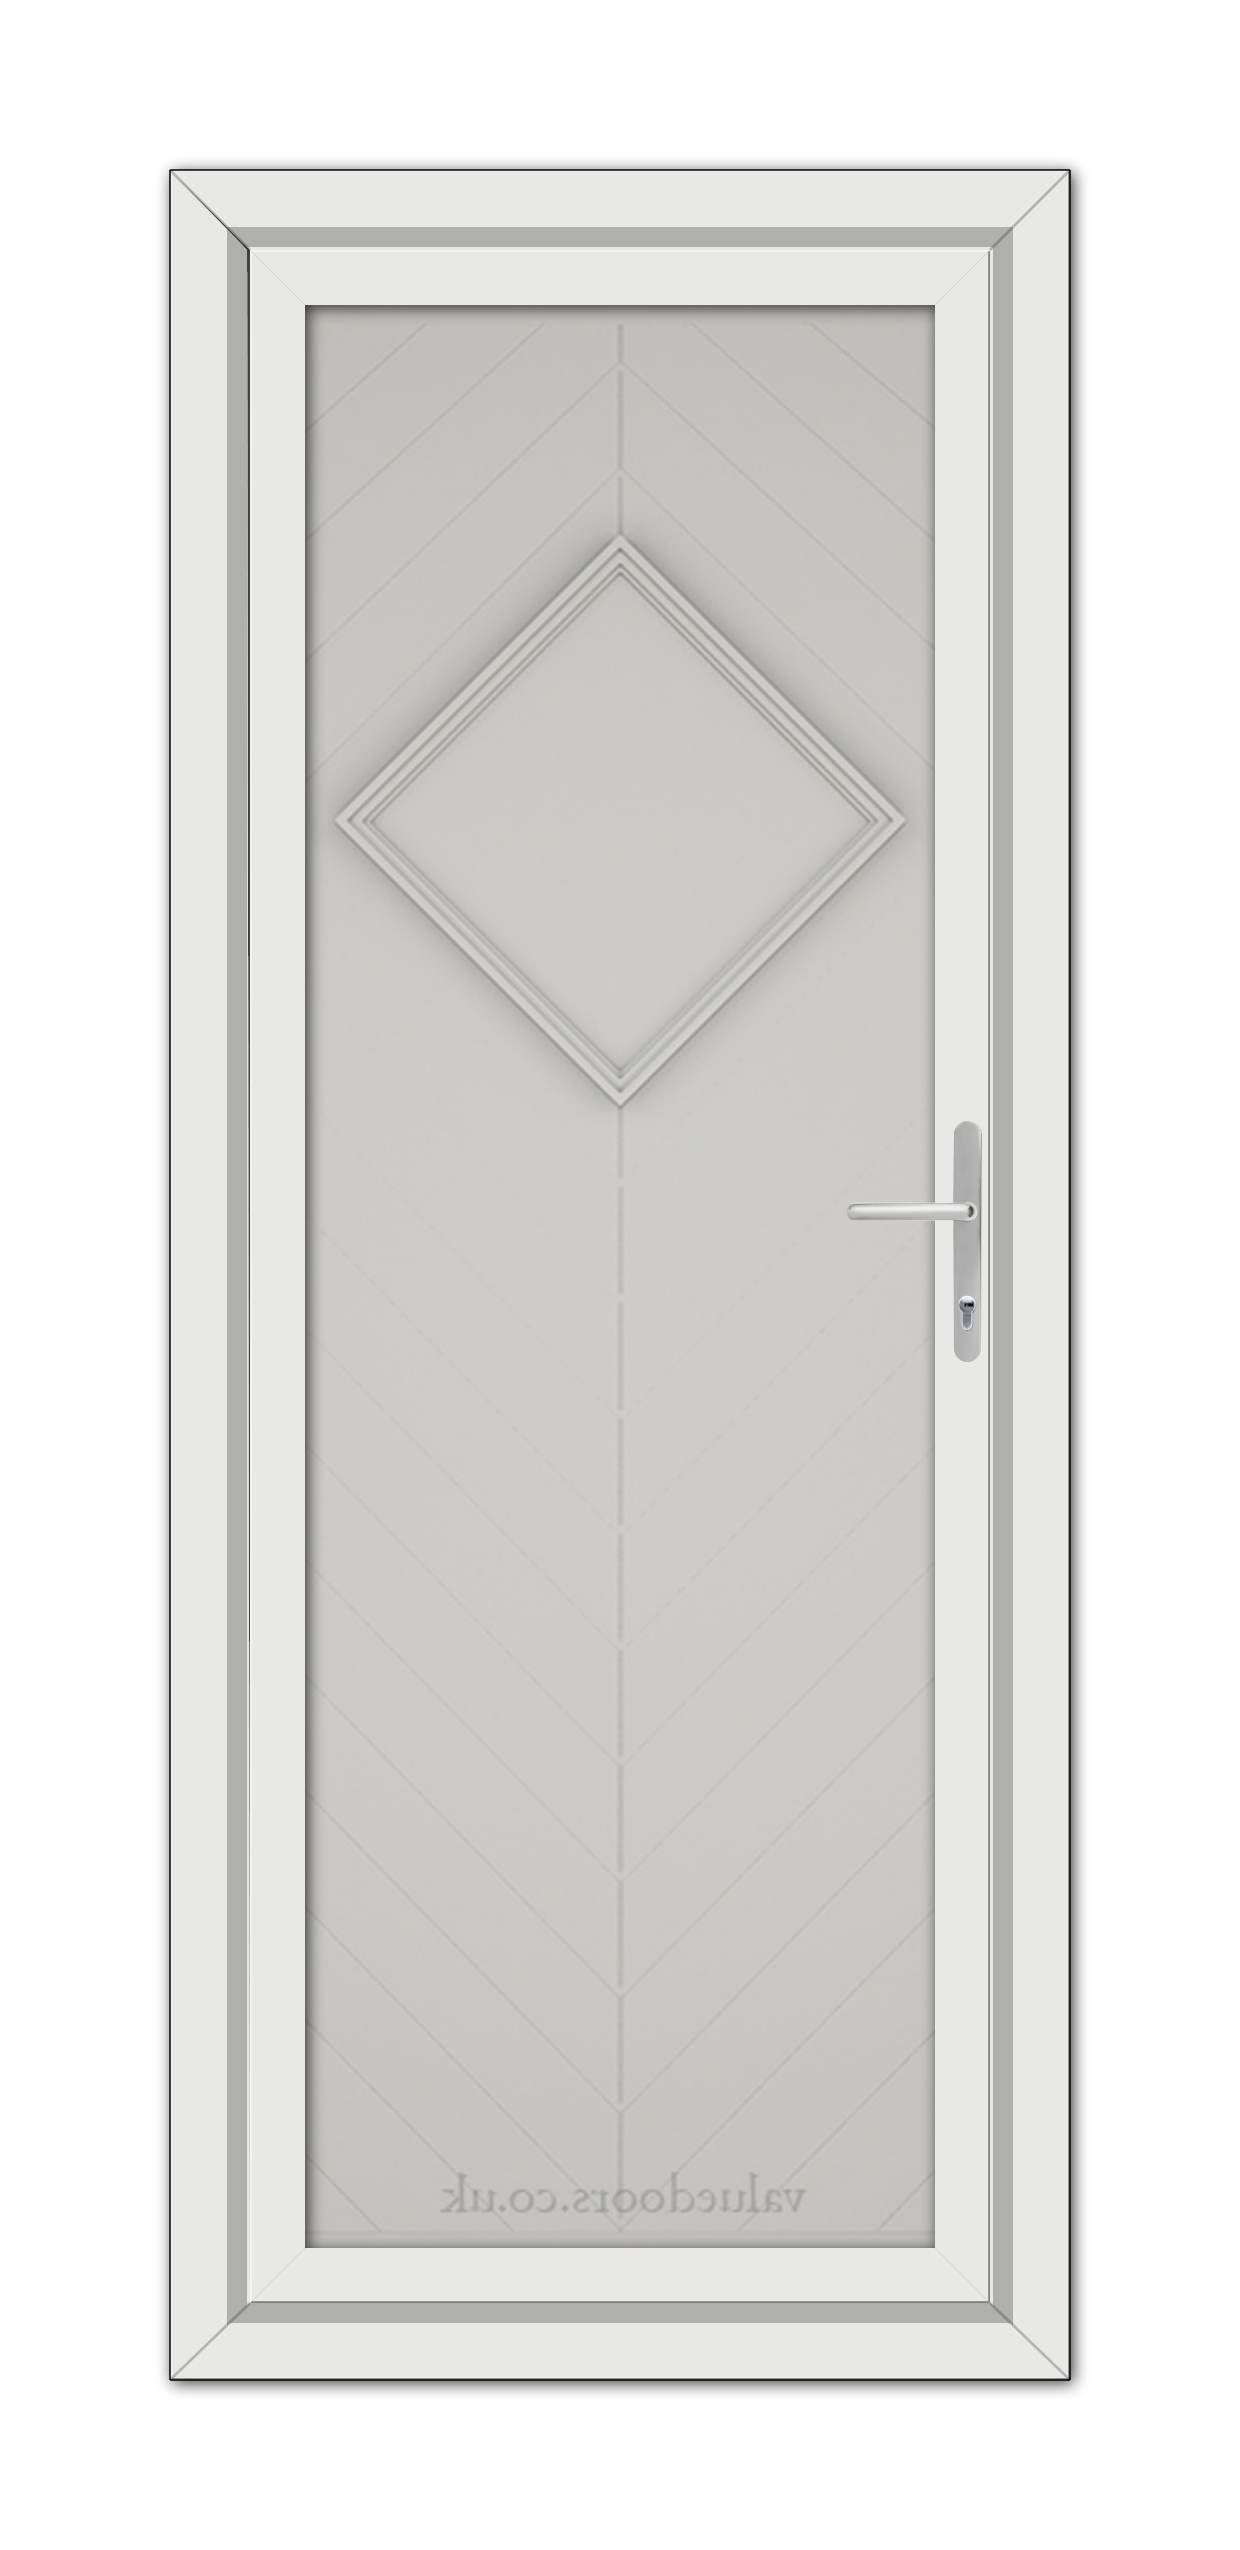 A Silver Grey Hamburg Solid uPVC door with a diamond design.